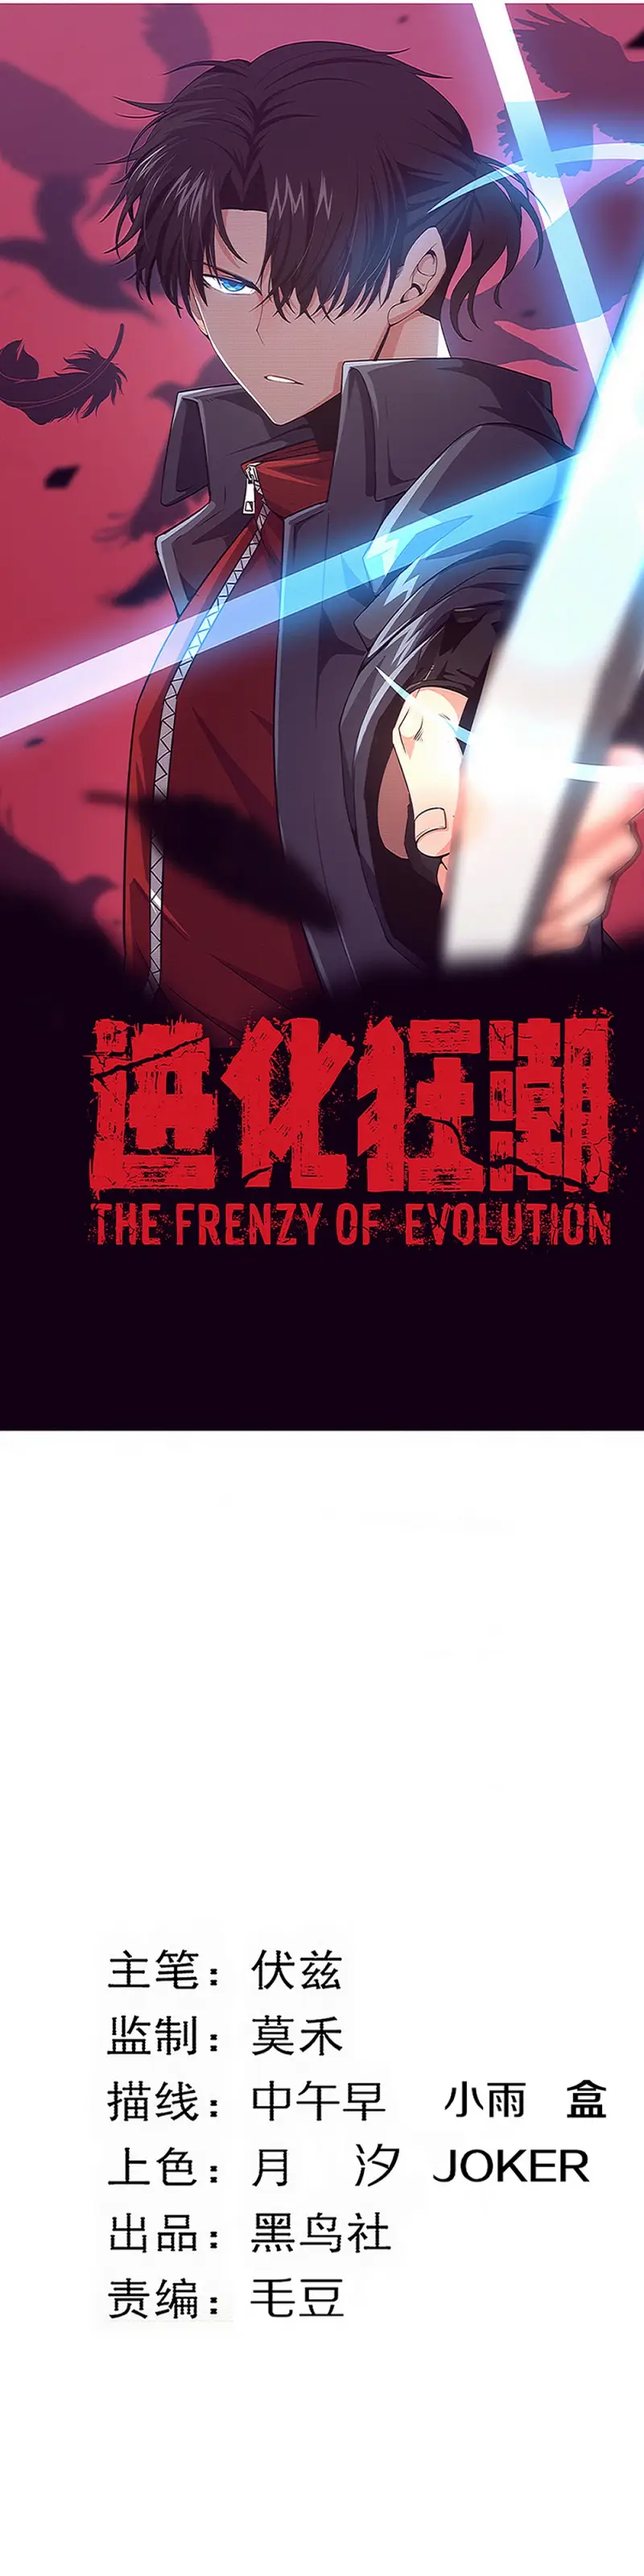 Evolution Frenzy - chapter 130 - #3